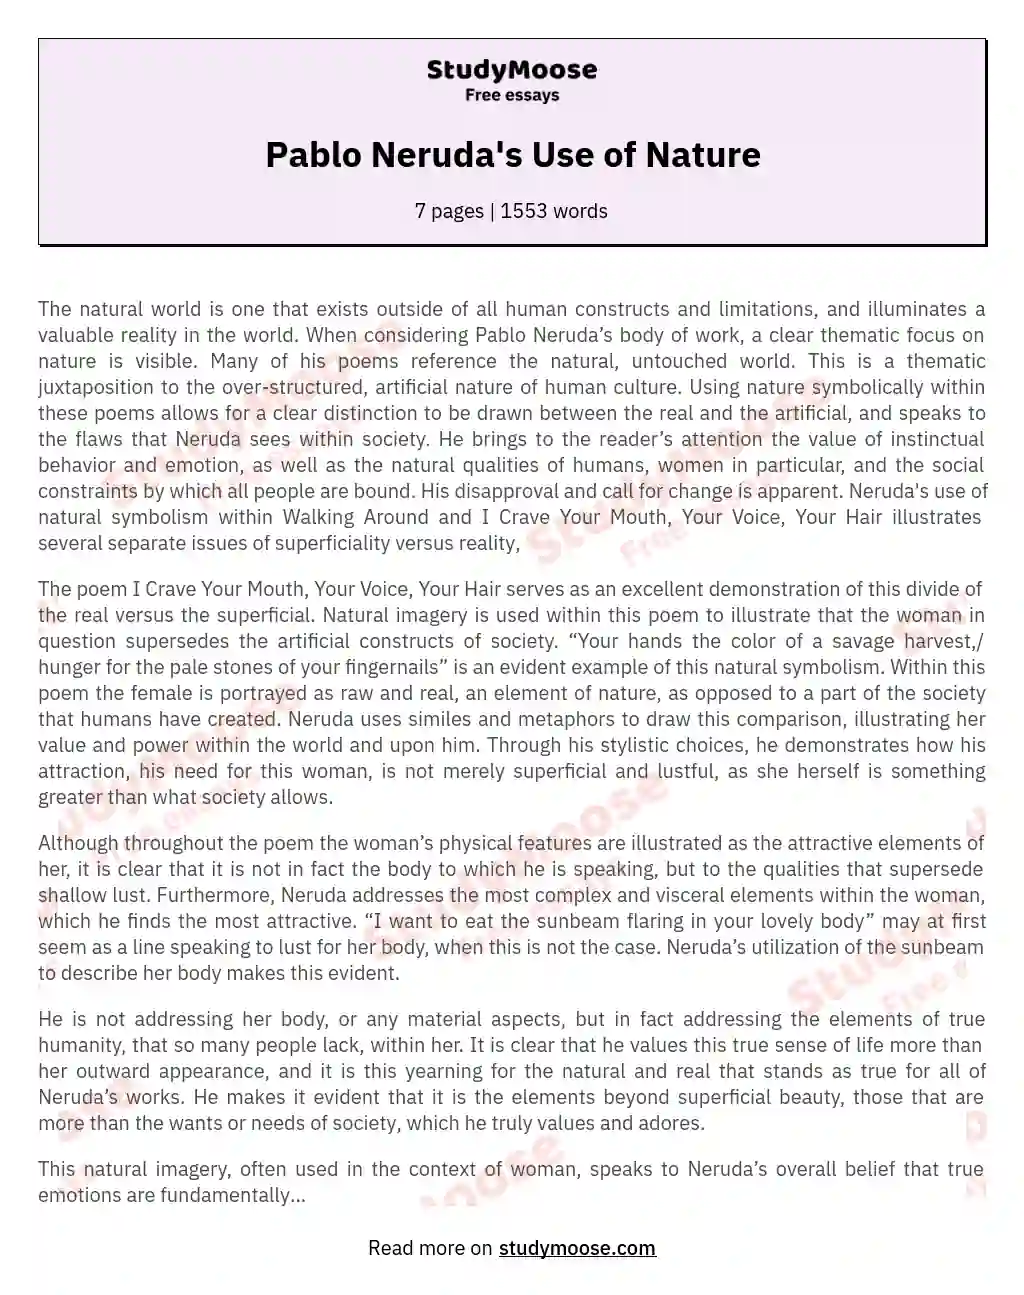 Pablo Neruda's Use of Nature essay